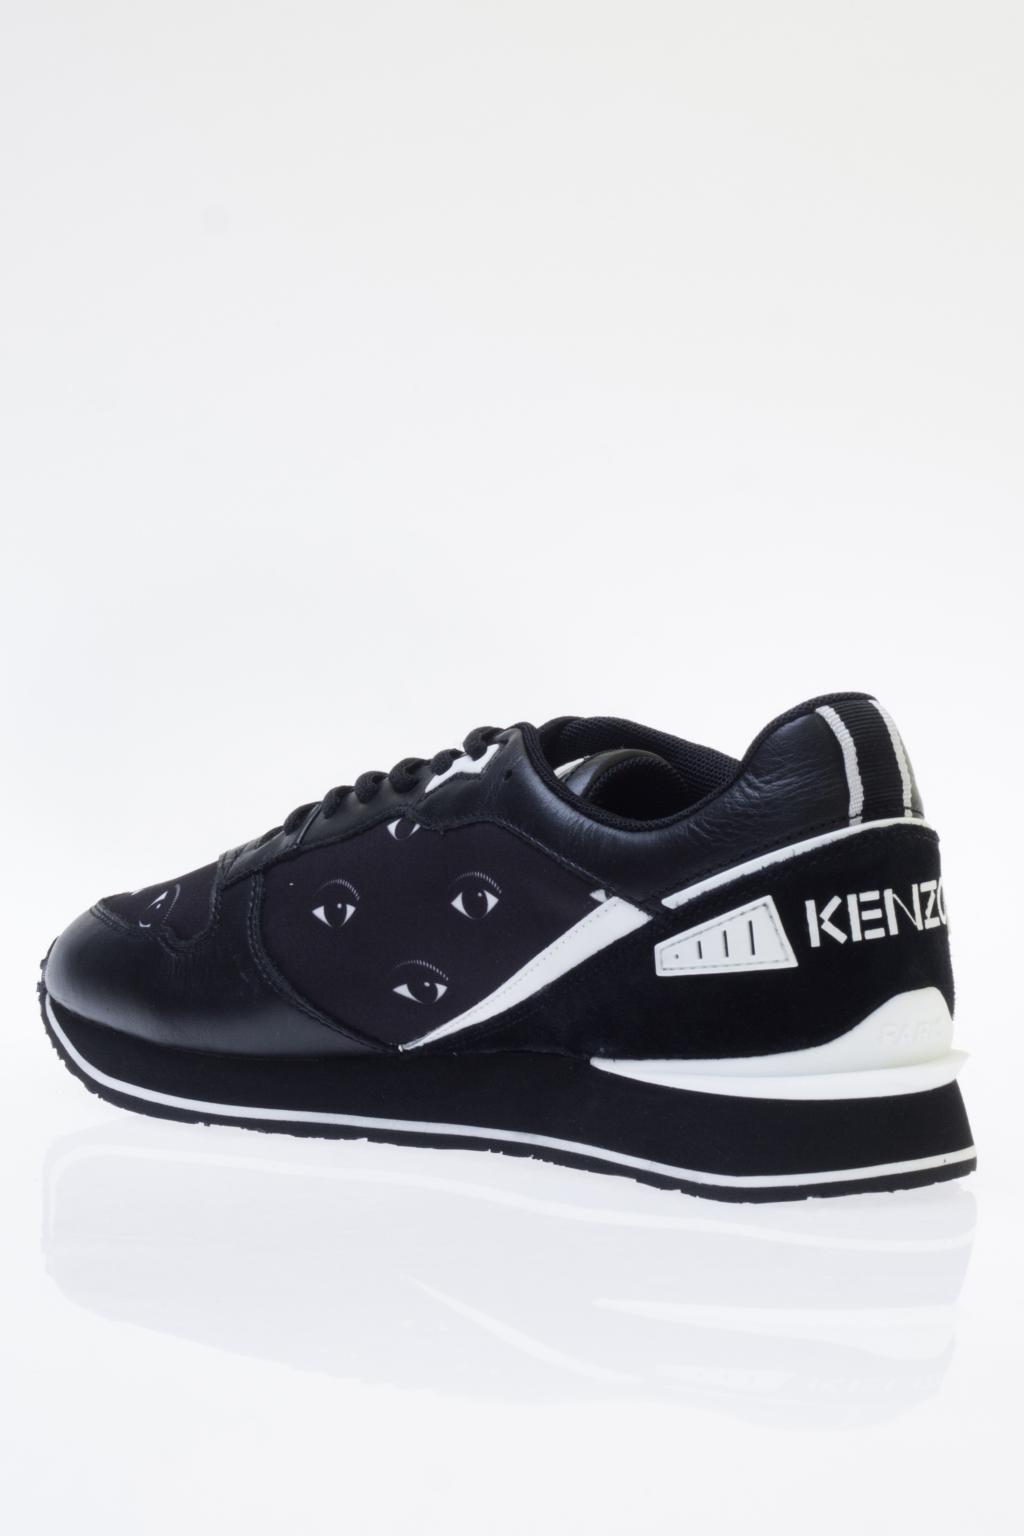 kenzo eye sneakers